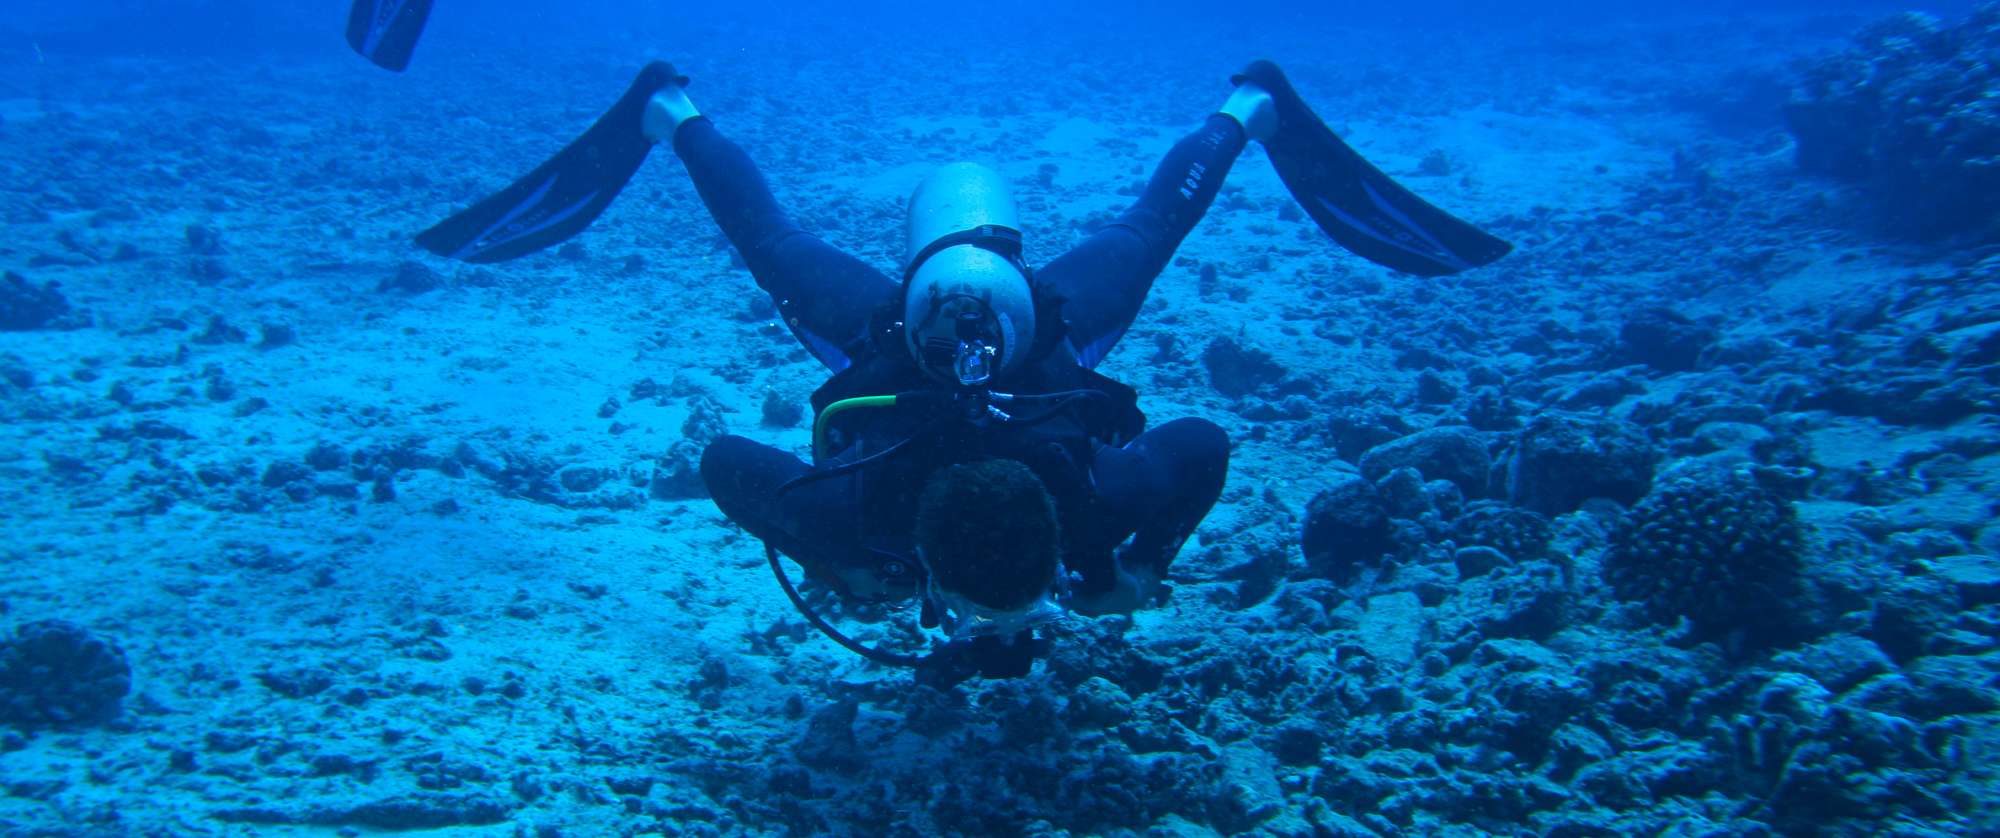 amal ahli add naked scuba diving photo